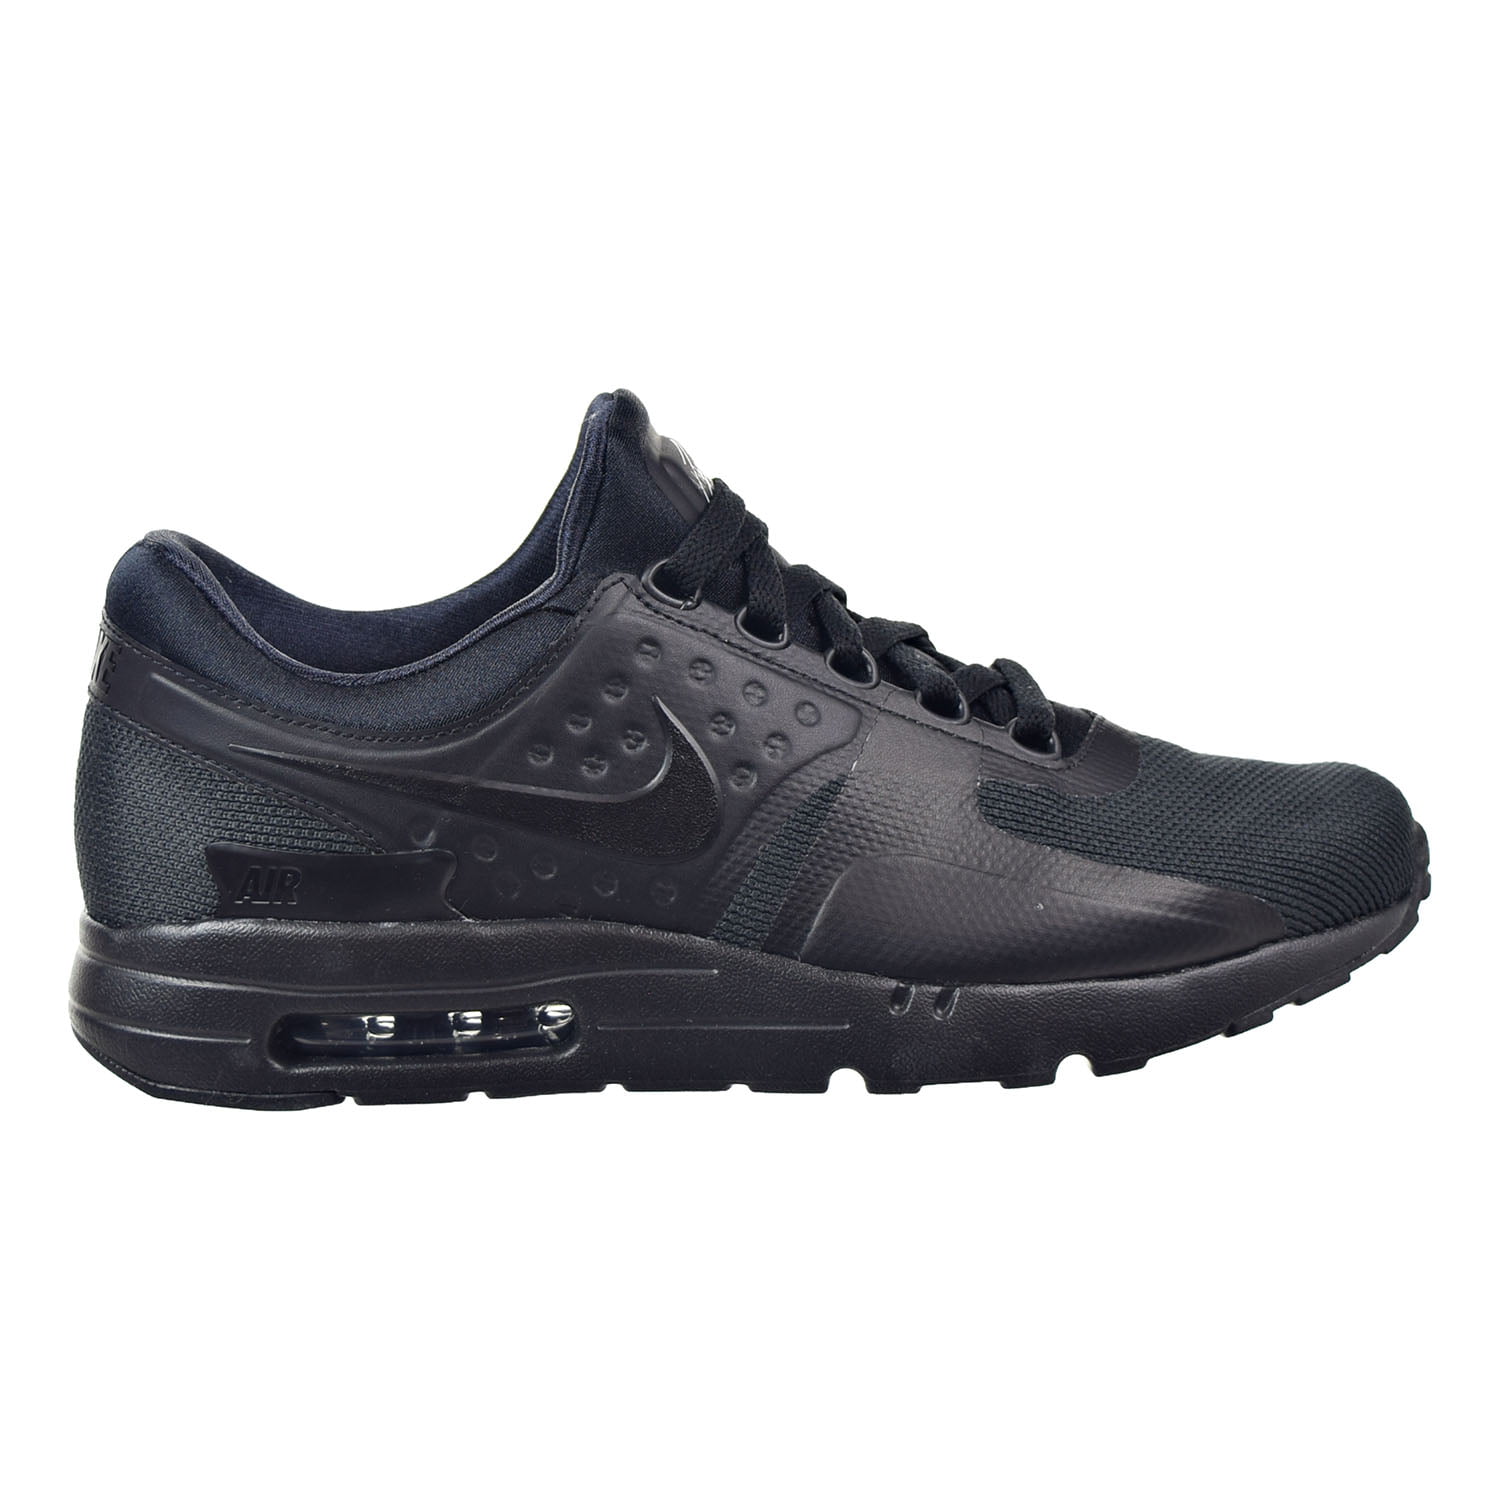 Nike Air Max Zero Essential Men's Shoes Black/Black/Black 876070-006